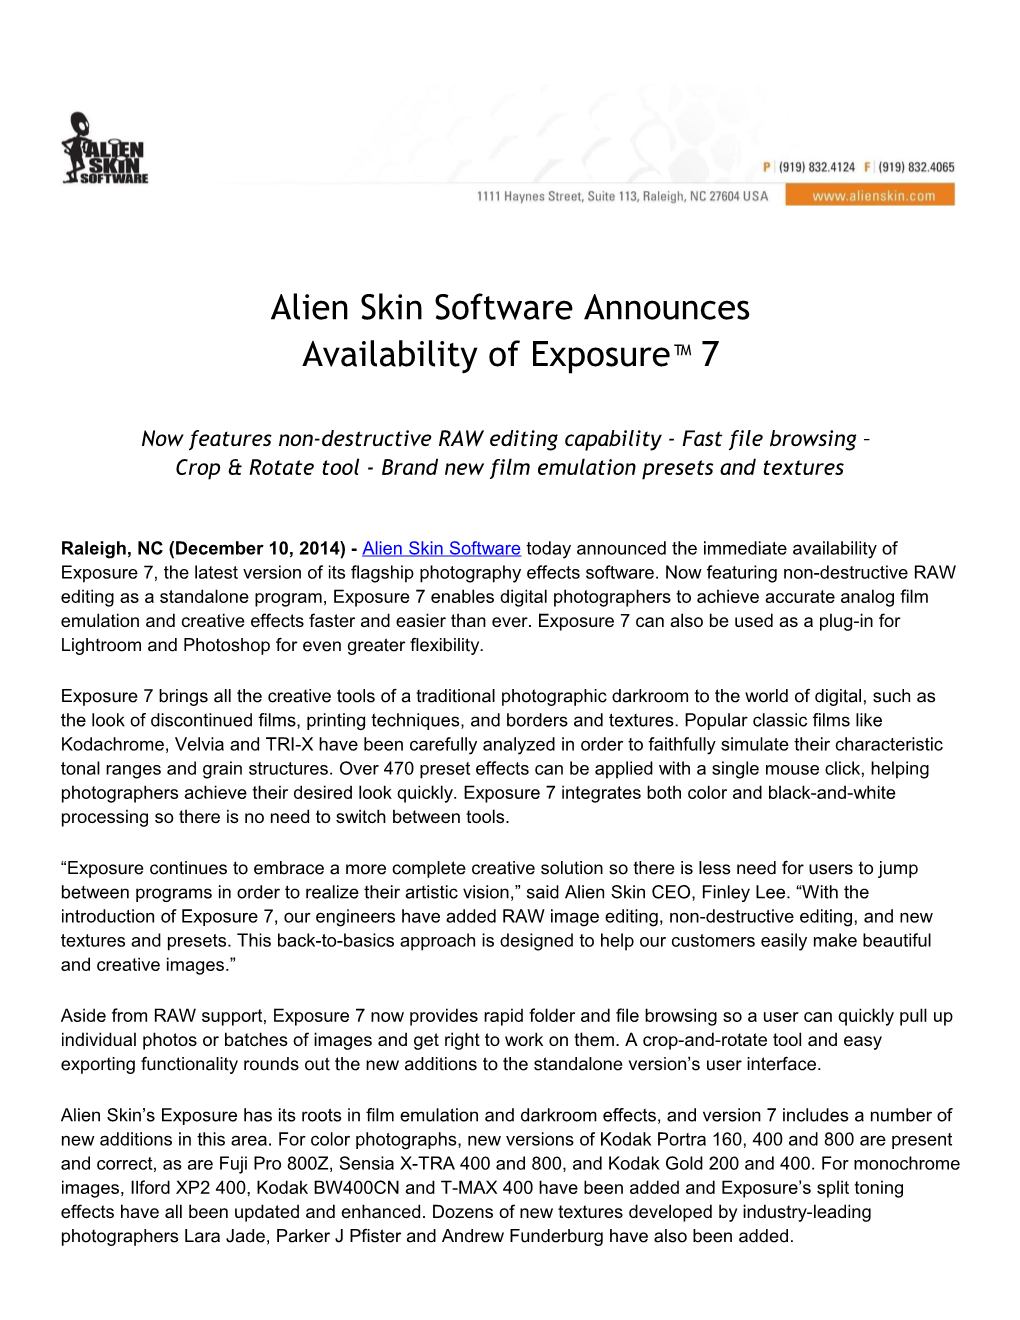 Alien Skin Software Exposure 7 Press Releasesir